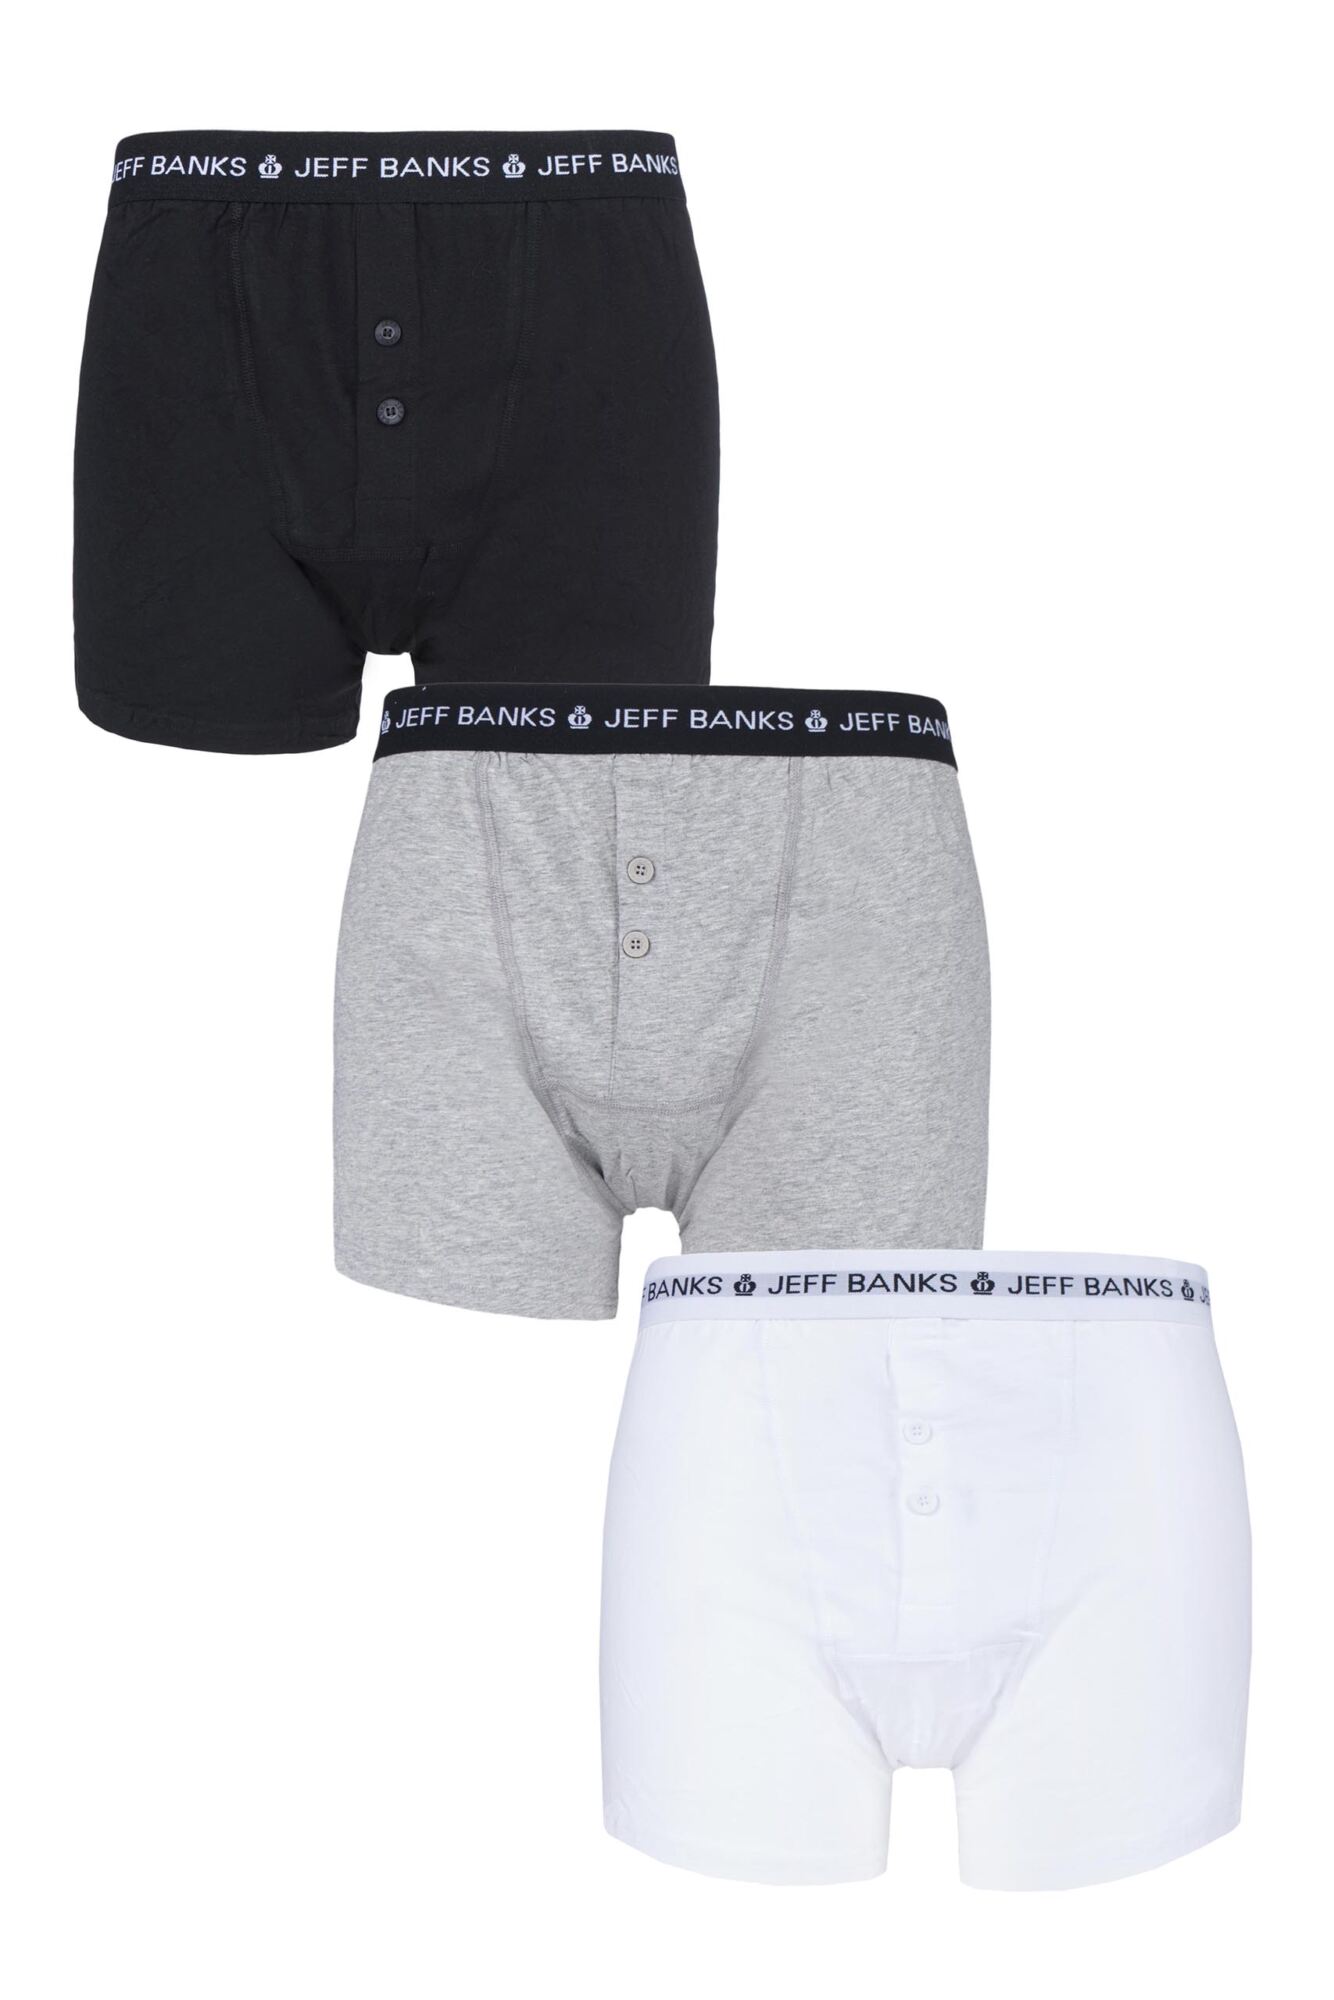 Jeff Banks Marlow Buttoned Boxer Shorts | SOCKSHOP